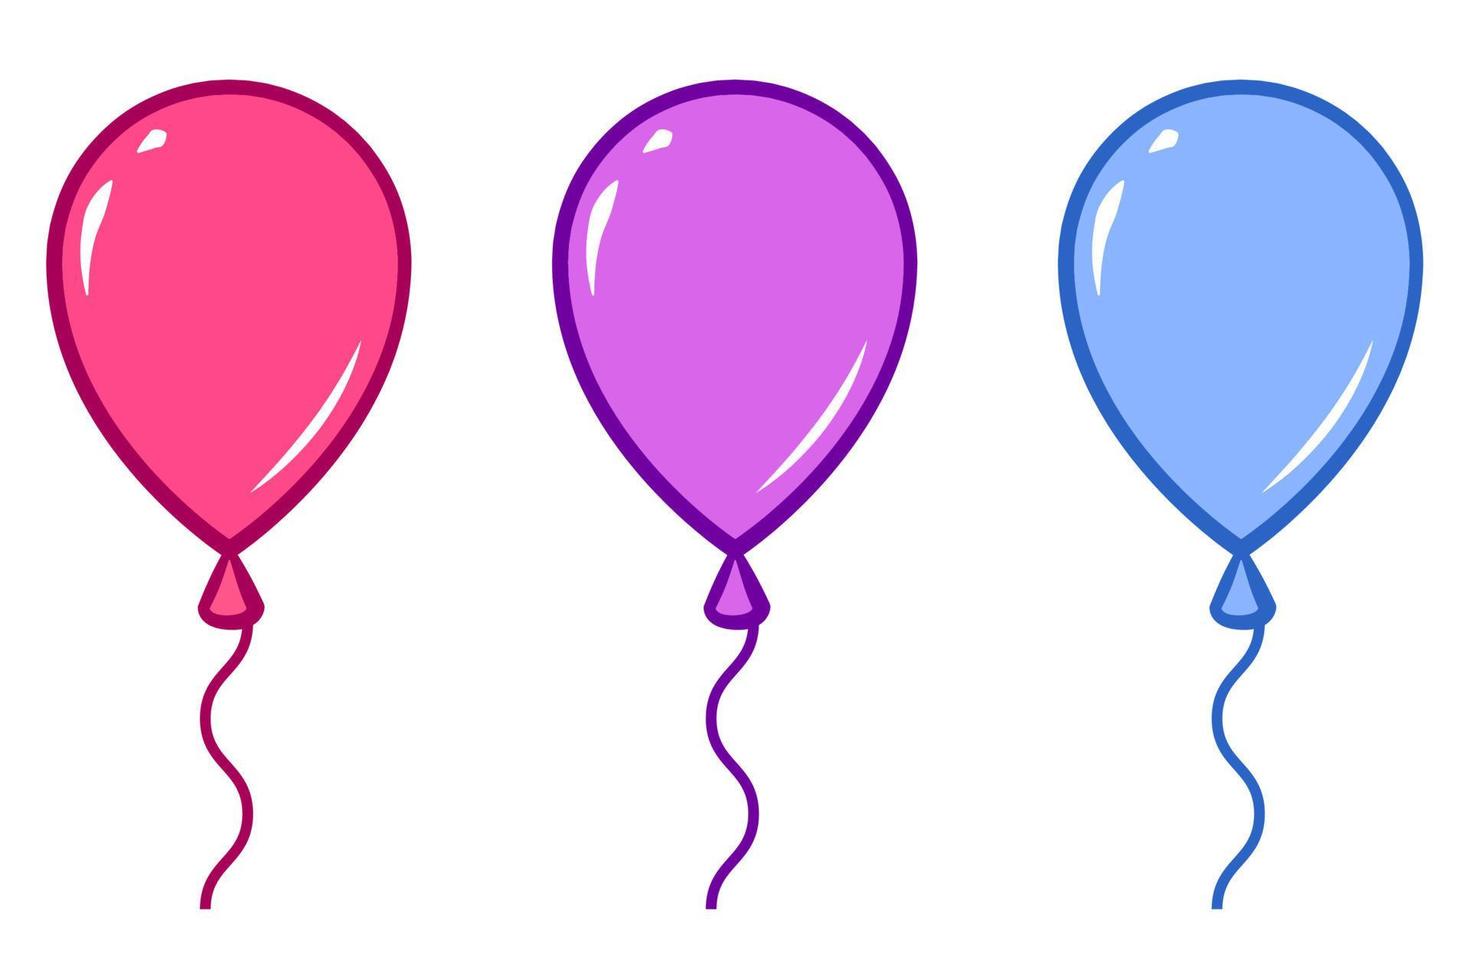 Ballon-Icon-Vektor-Set. gruppe bunter luftballons, rosa, lila, blaue dekorationen, flacher designelementsatz. vektor